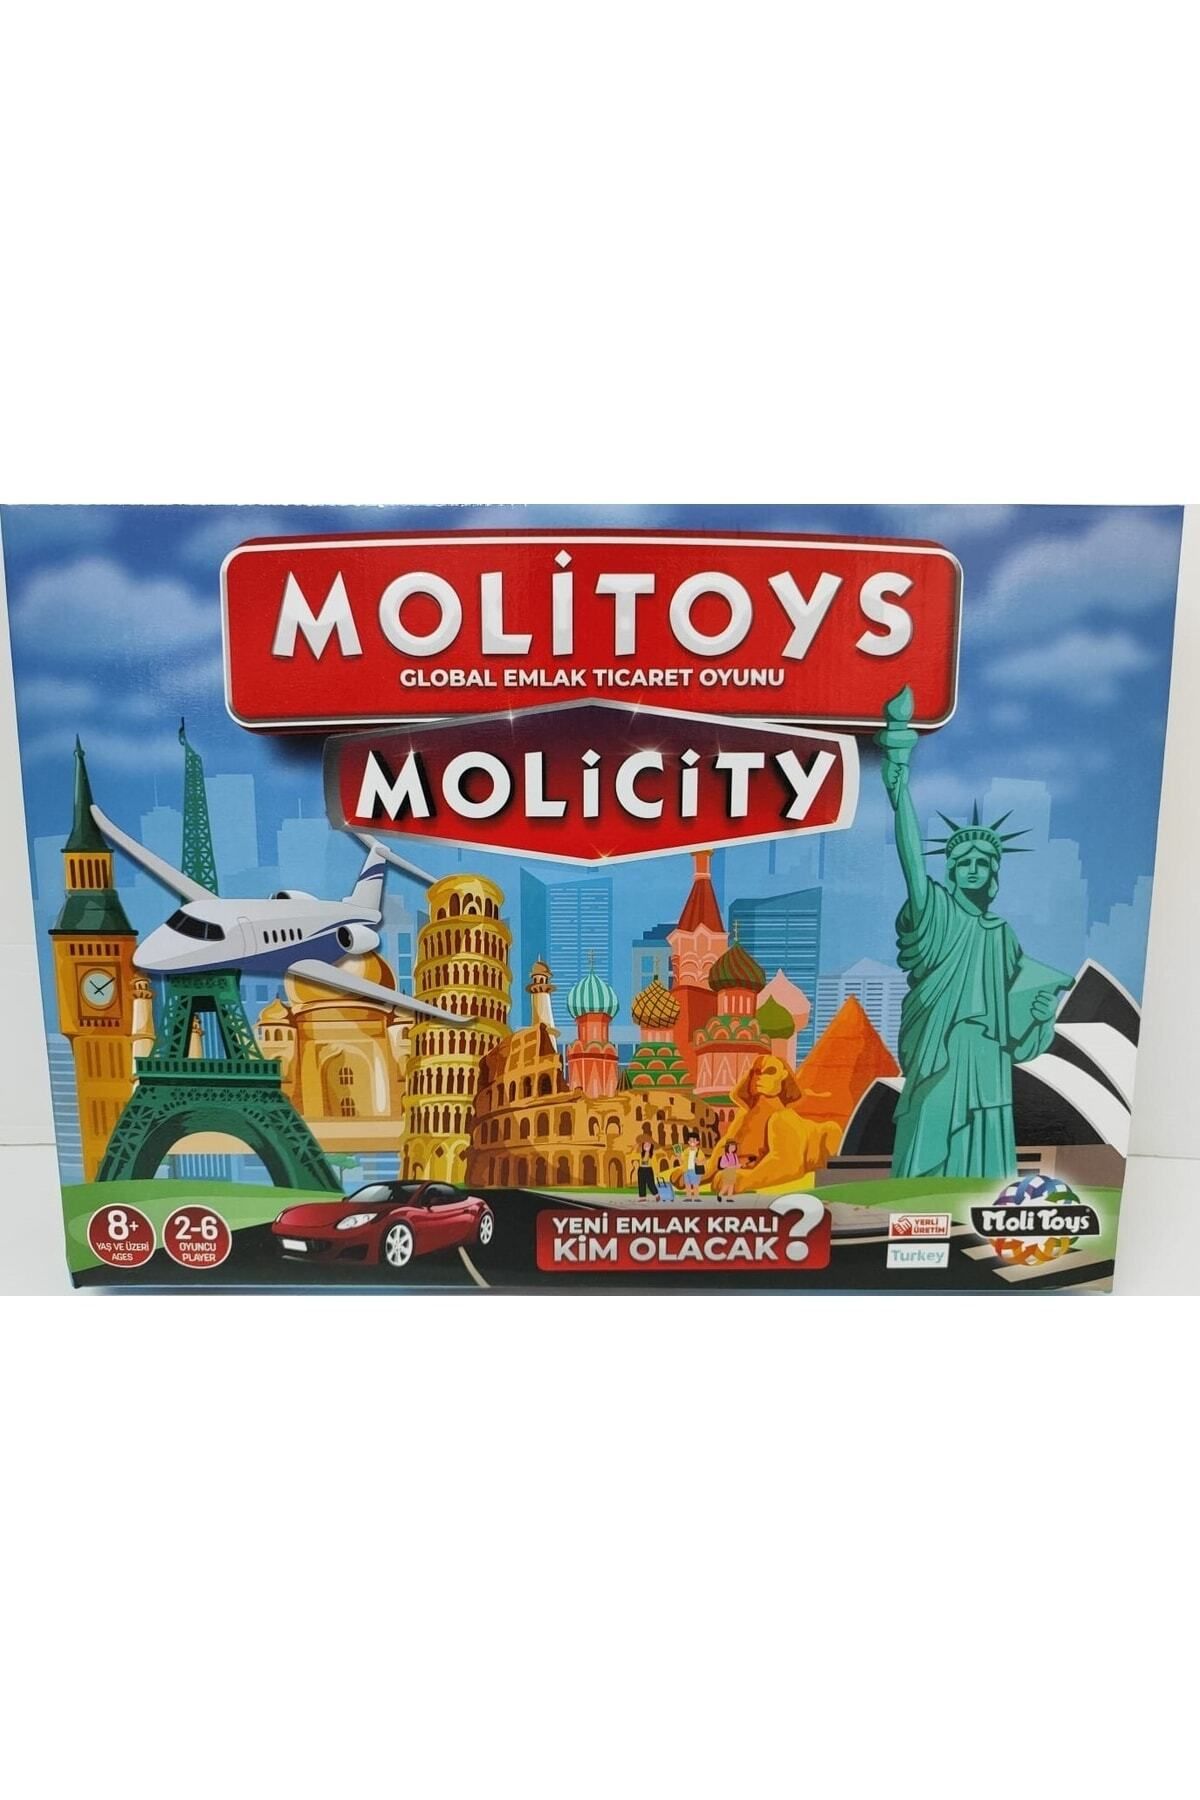 Moli Toys Emlak Ticaret Oyunu Molipoly Molicity Monopoly Monopoli Metropol Mega City Aile Oyunu